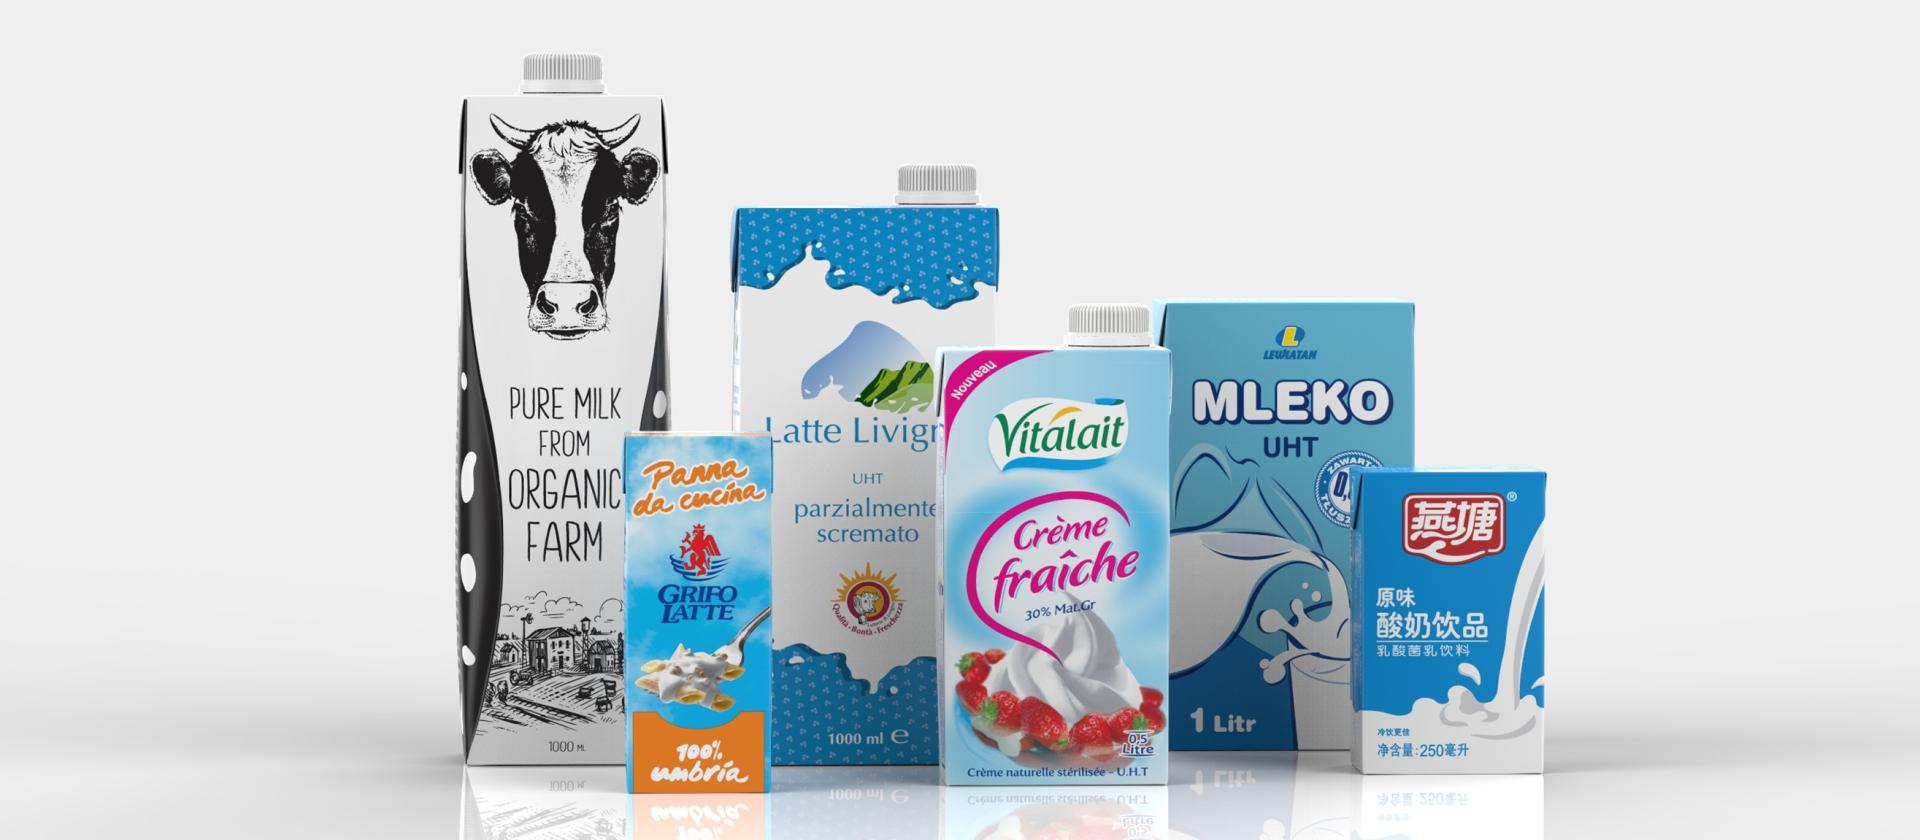 Leche UHT y productos lácteos rellenos en envases de cartón aséptico IPI